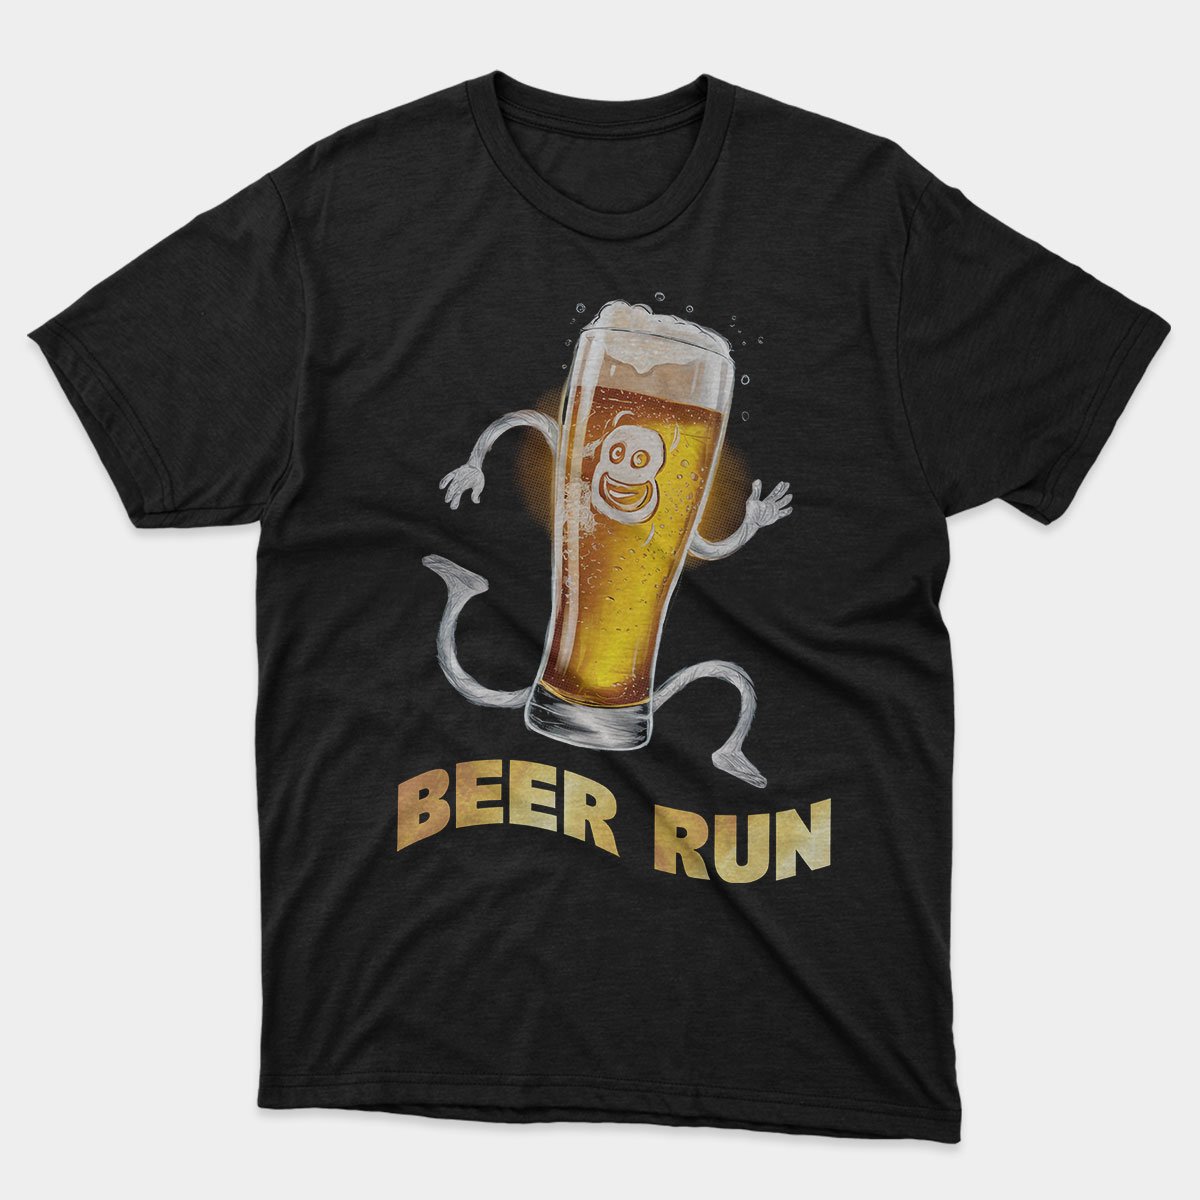 Beer Run T-shirt